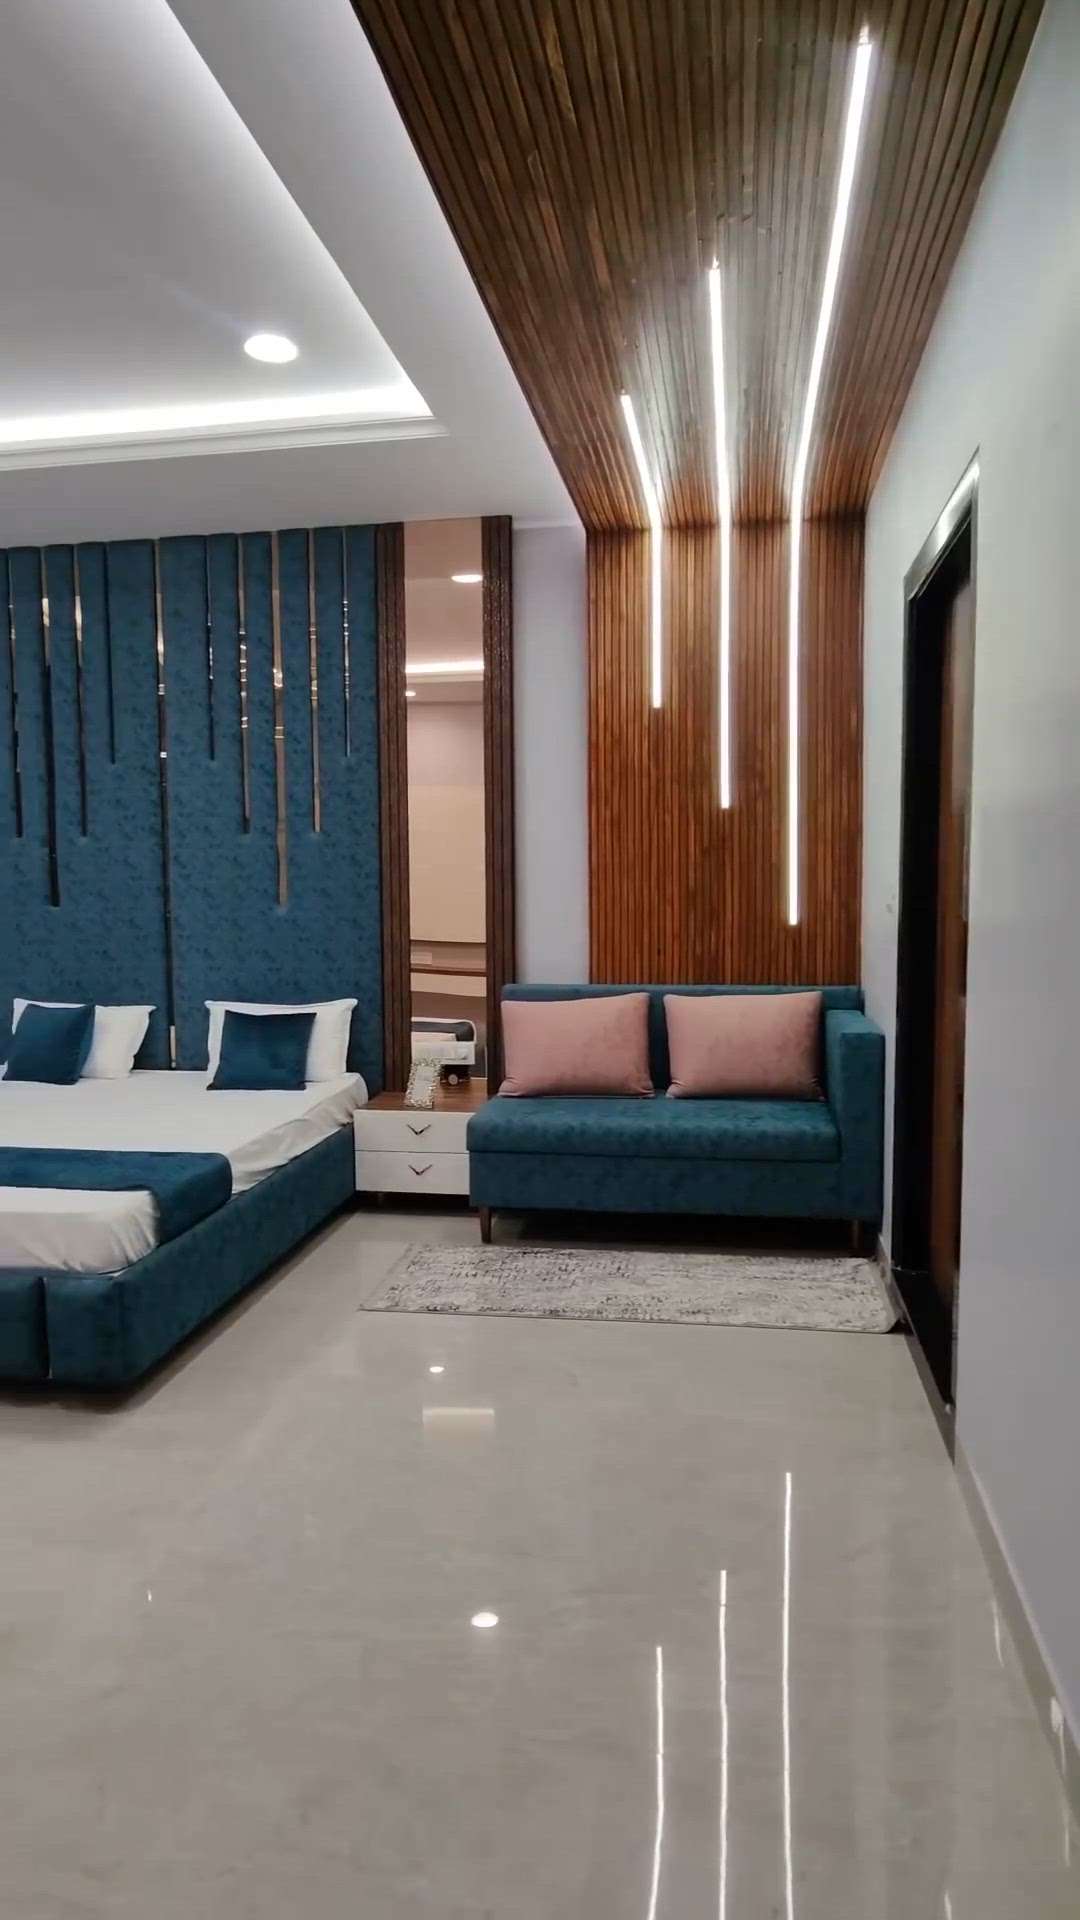 #BedroomDecor  #luxurybedroom  #akhterhomedecor  #InteriorDesigner  #homrdesign  #homeinteriors  #HomeDecor